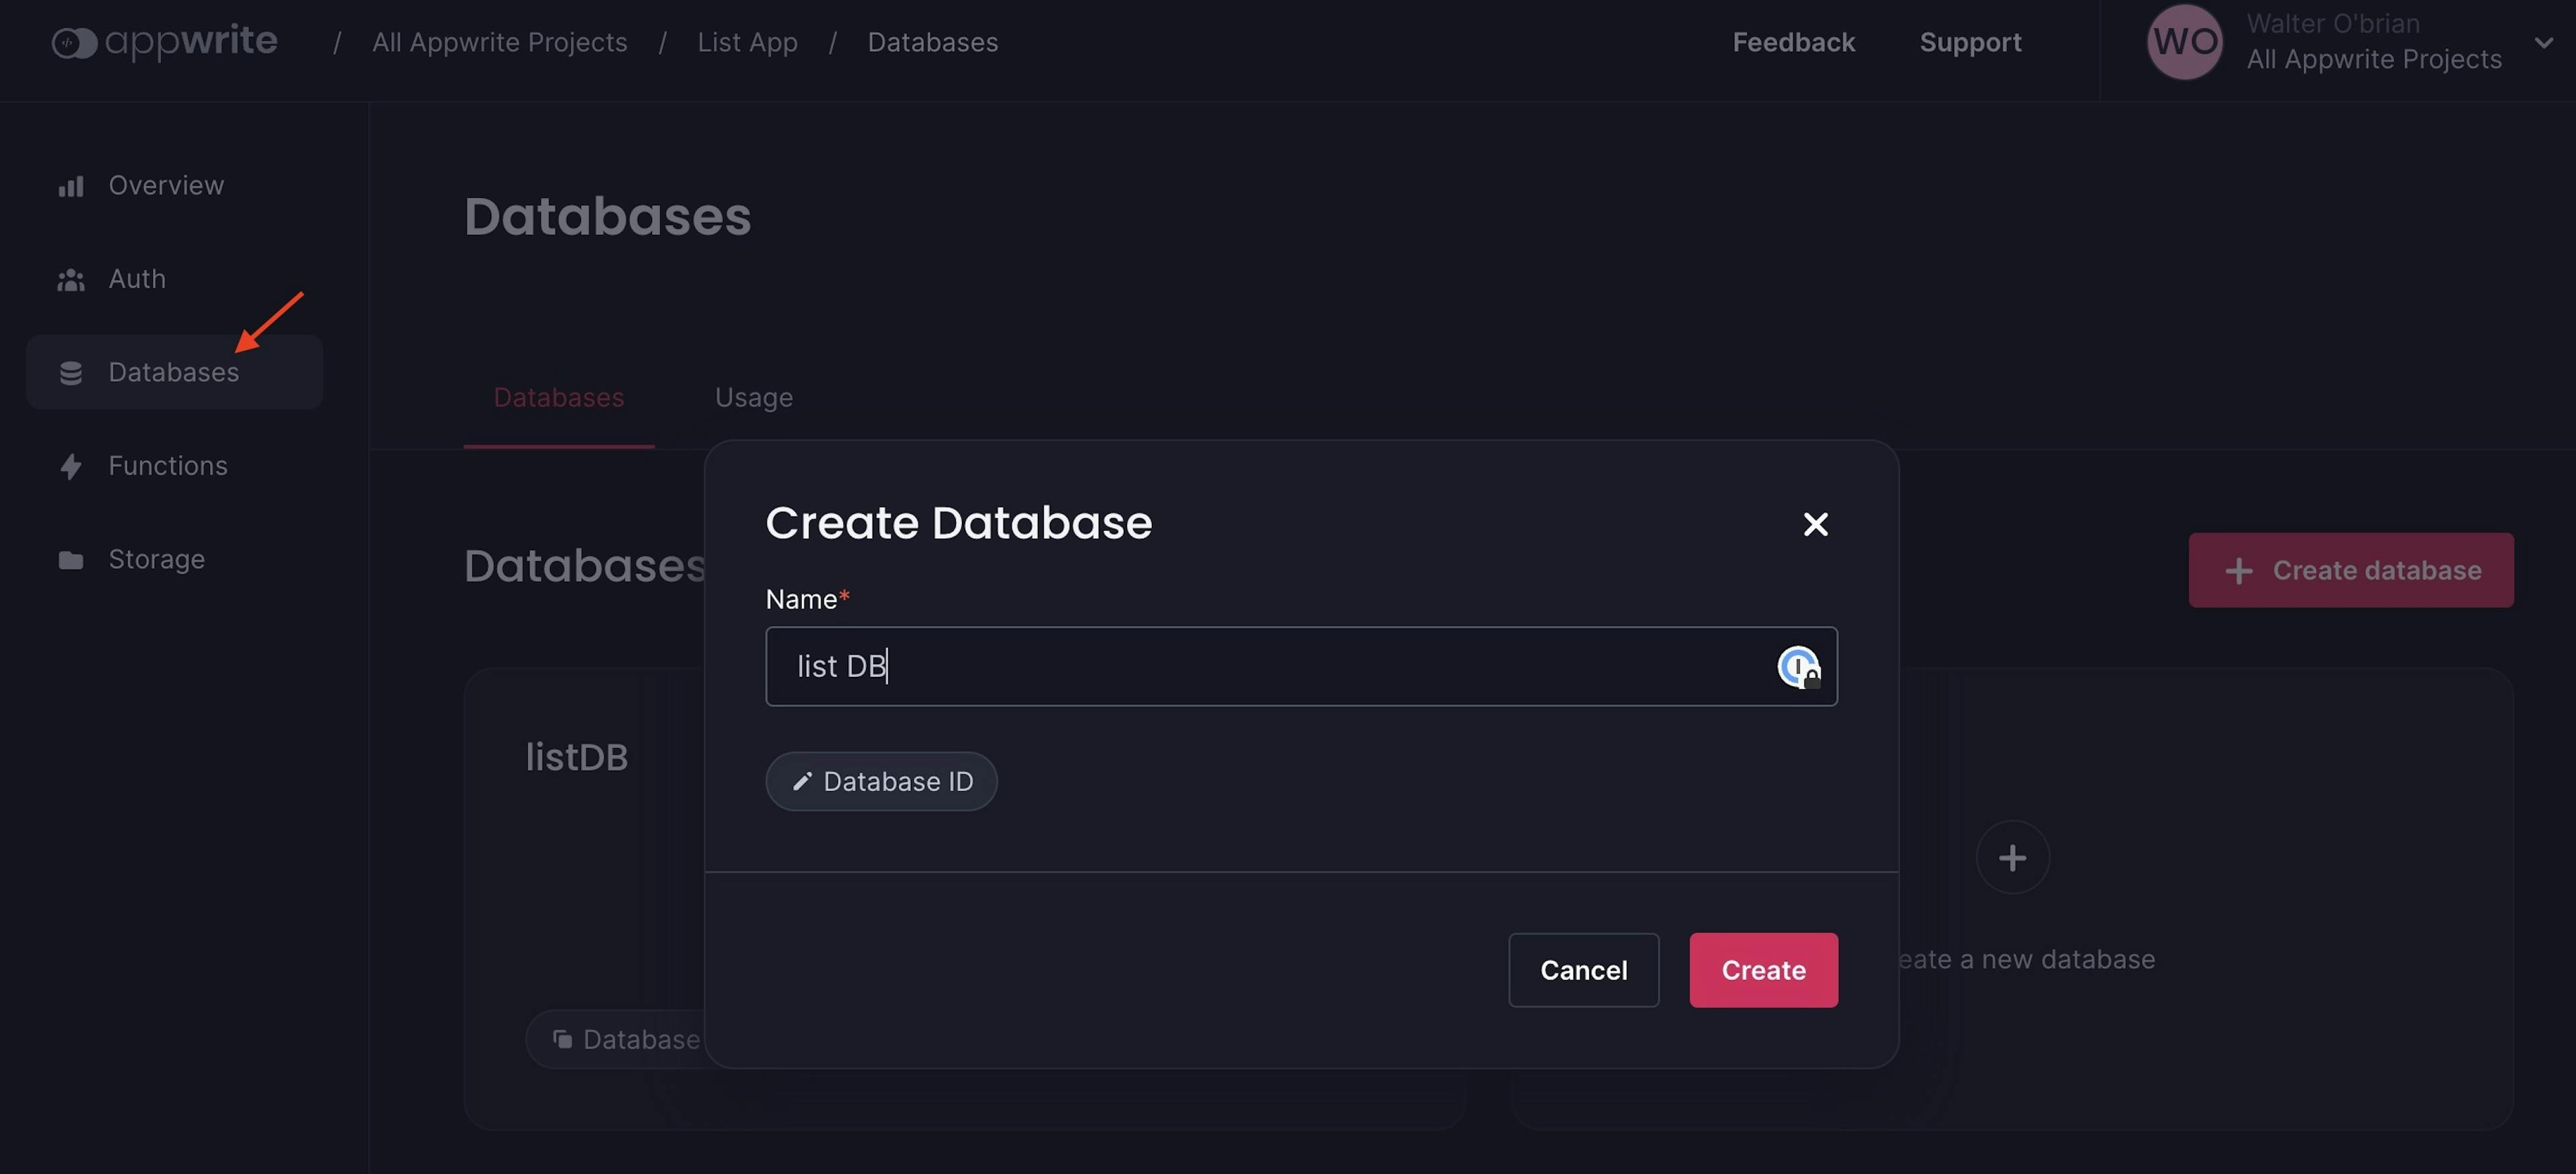 create a database